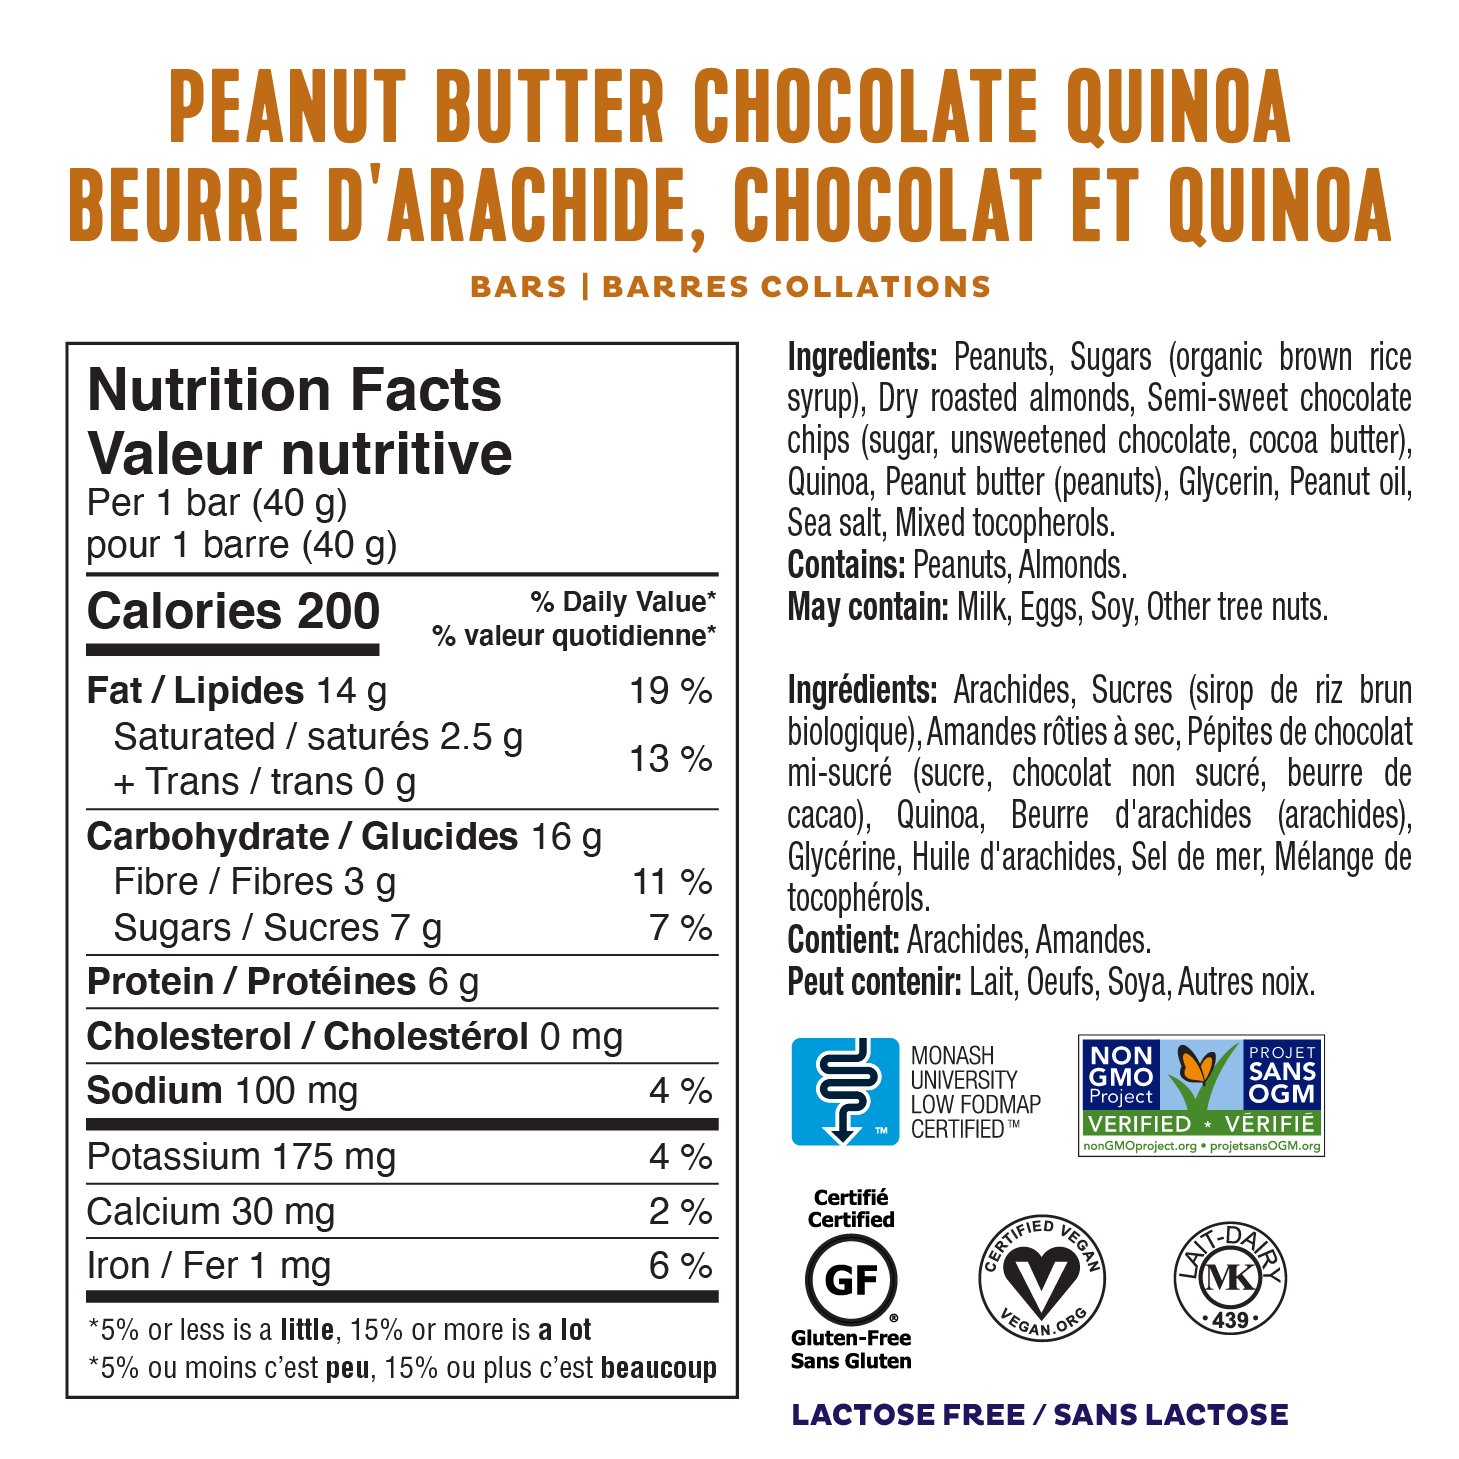 Peanut Butter Chocolate Quinoa Bars - Box of 12